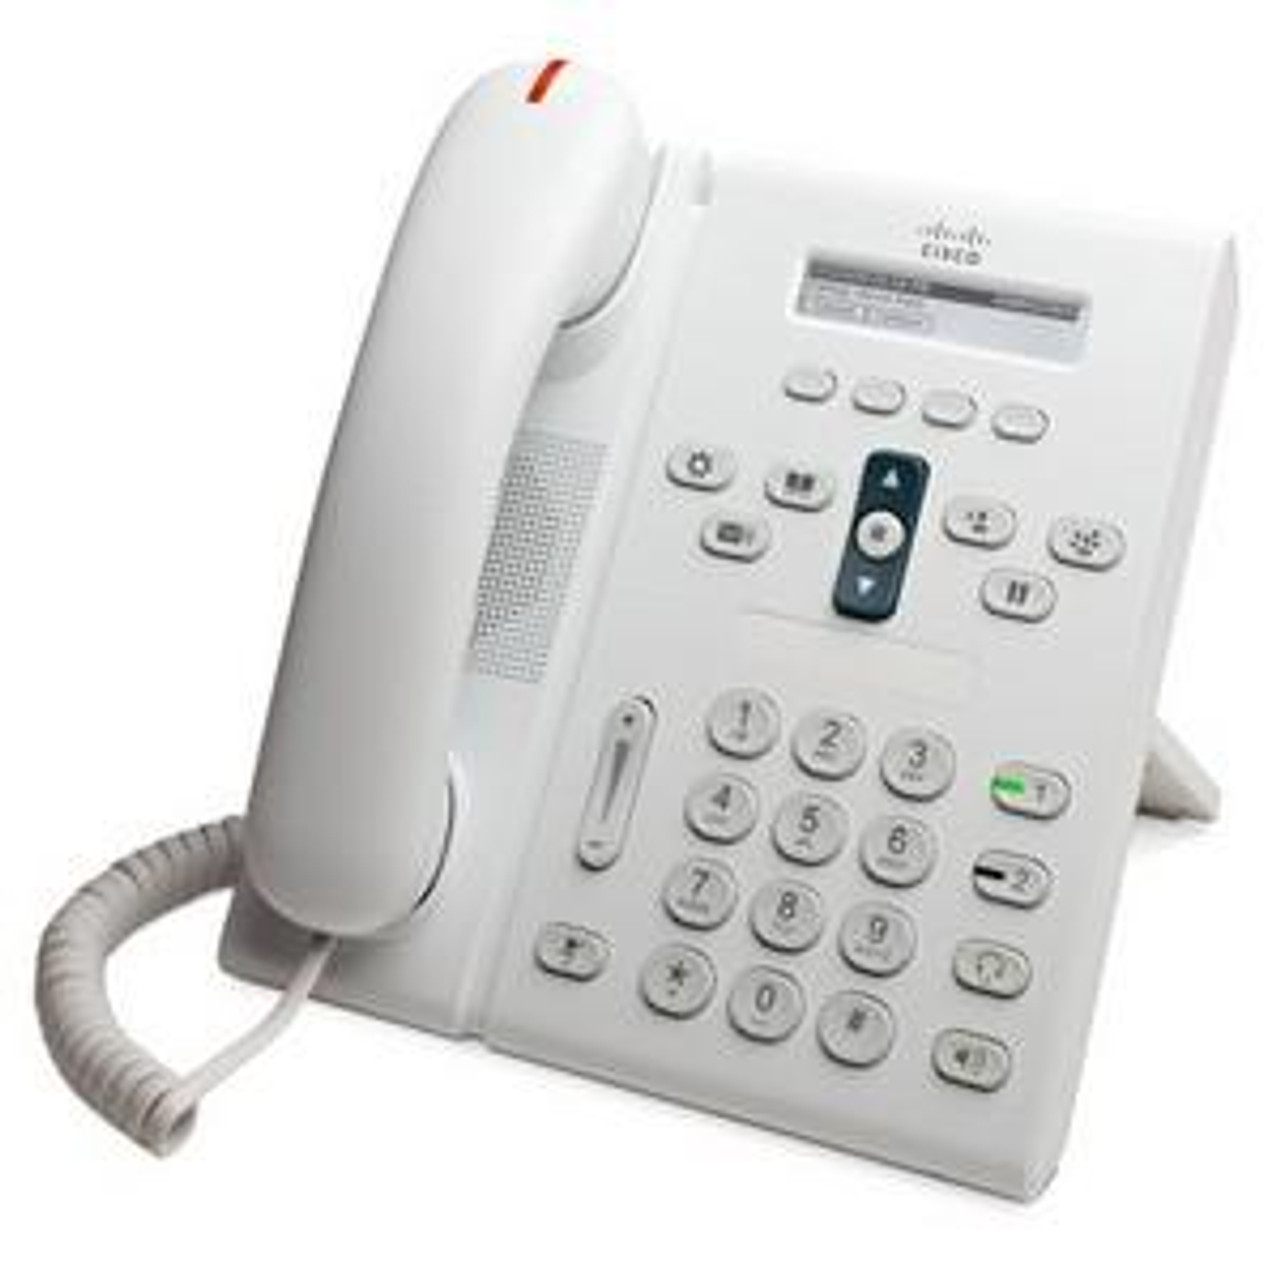 CP-6921-WL-K9= Cisco Unified Ip Phone 6921 Charcoal Slimline Handset (Refurbished)